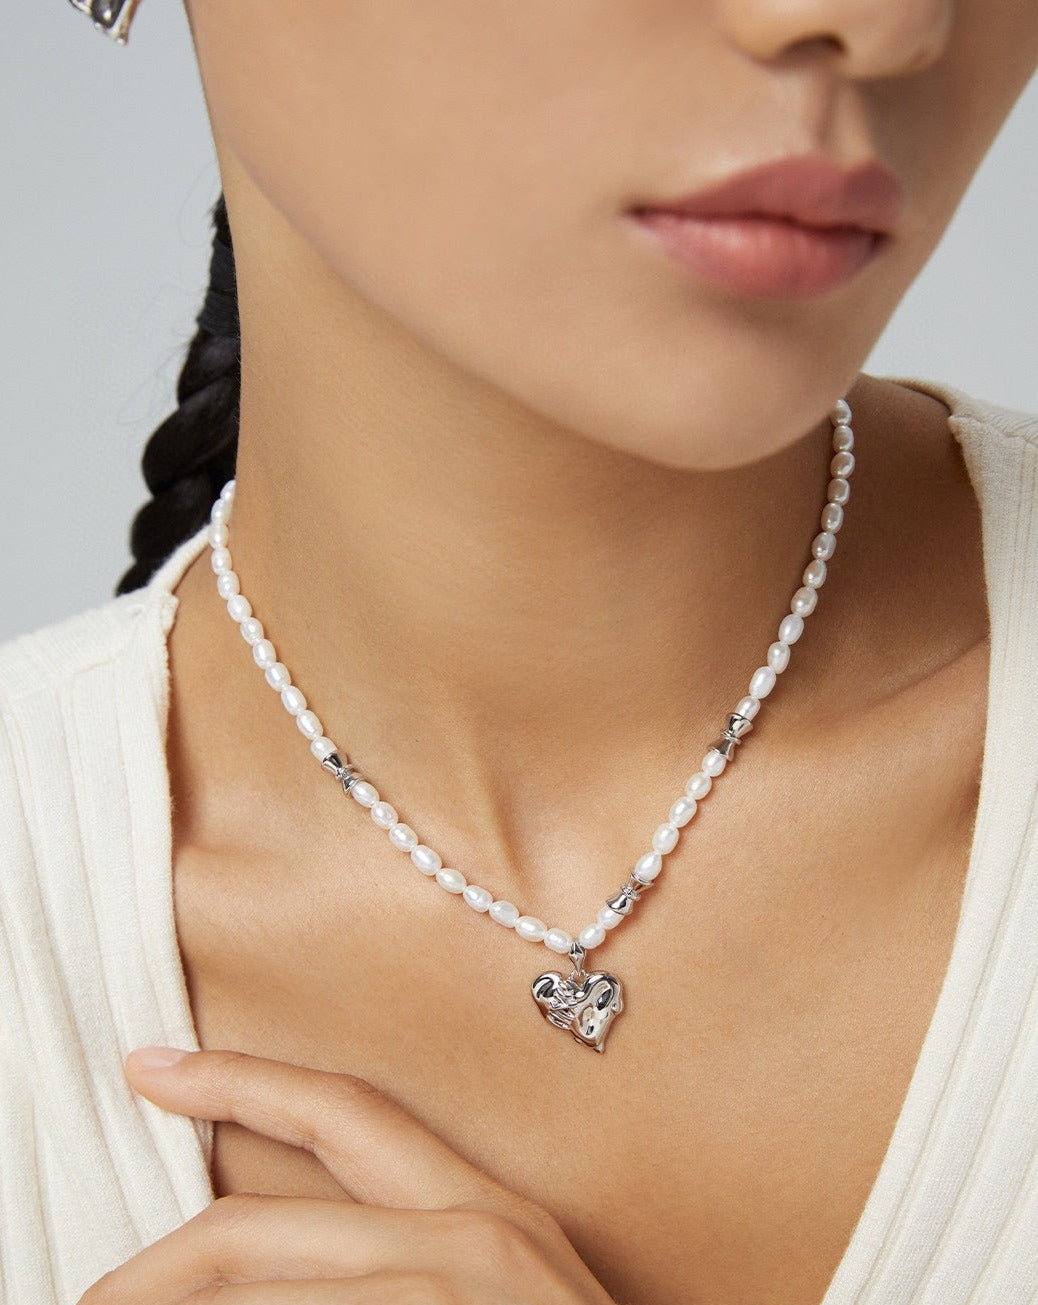 Heart Shaped Necklace and Earrings Jewelry Set - Walmart.com